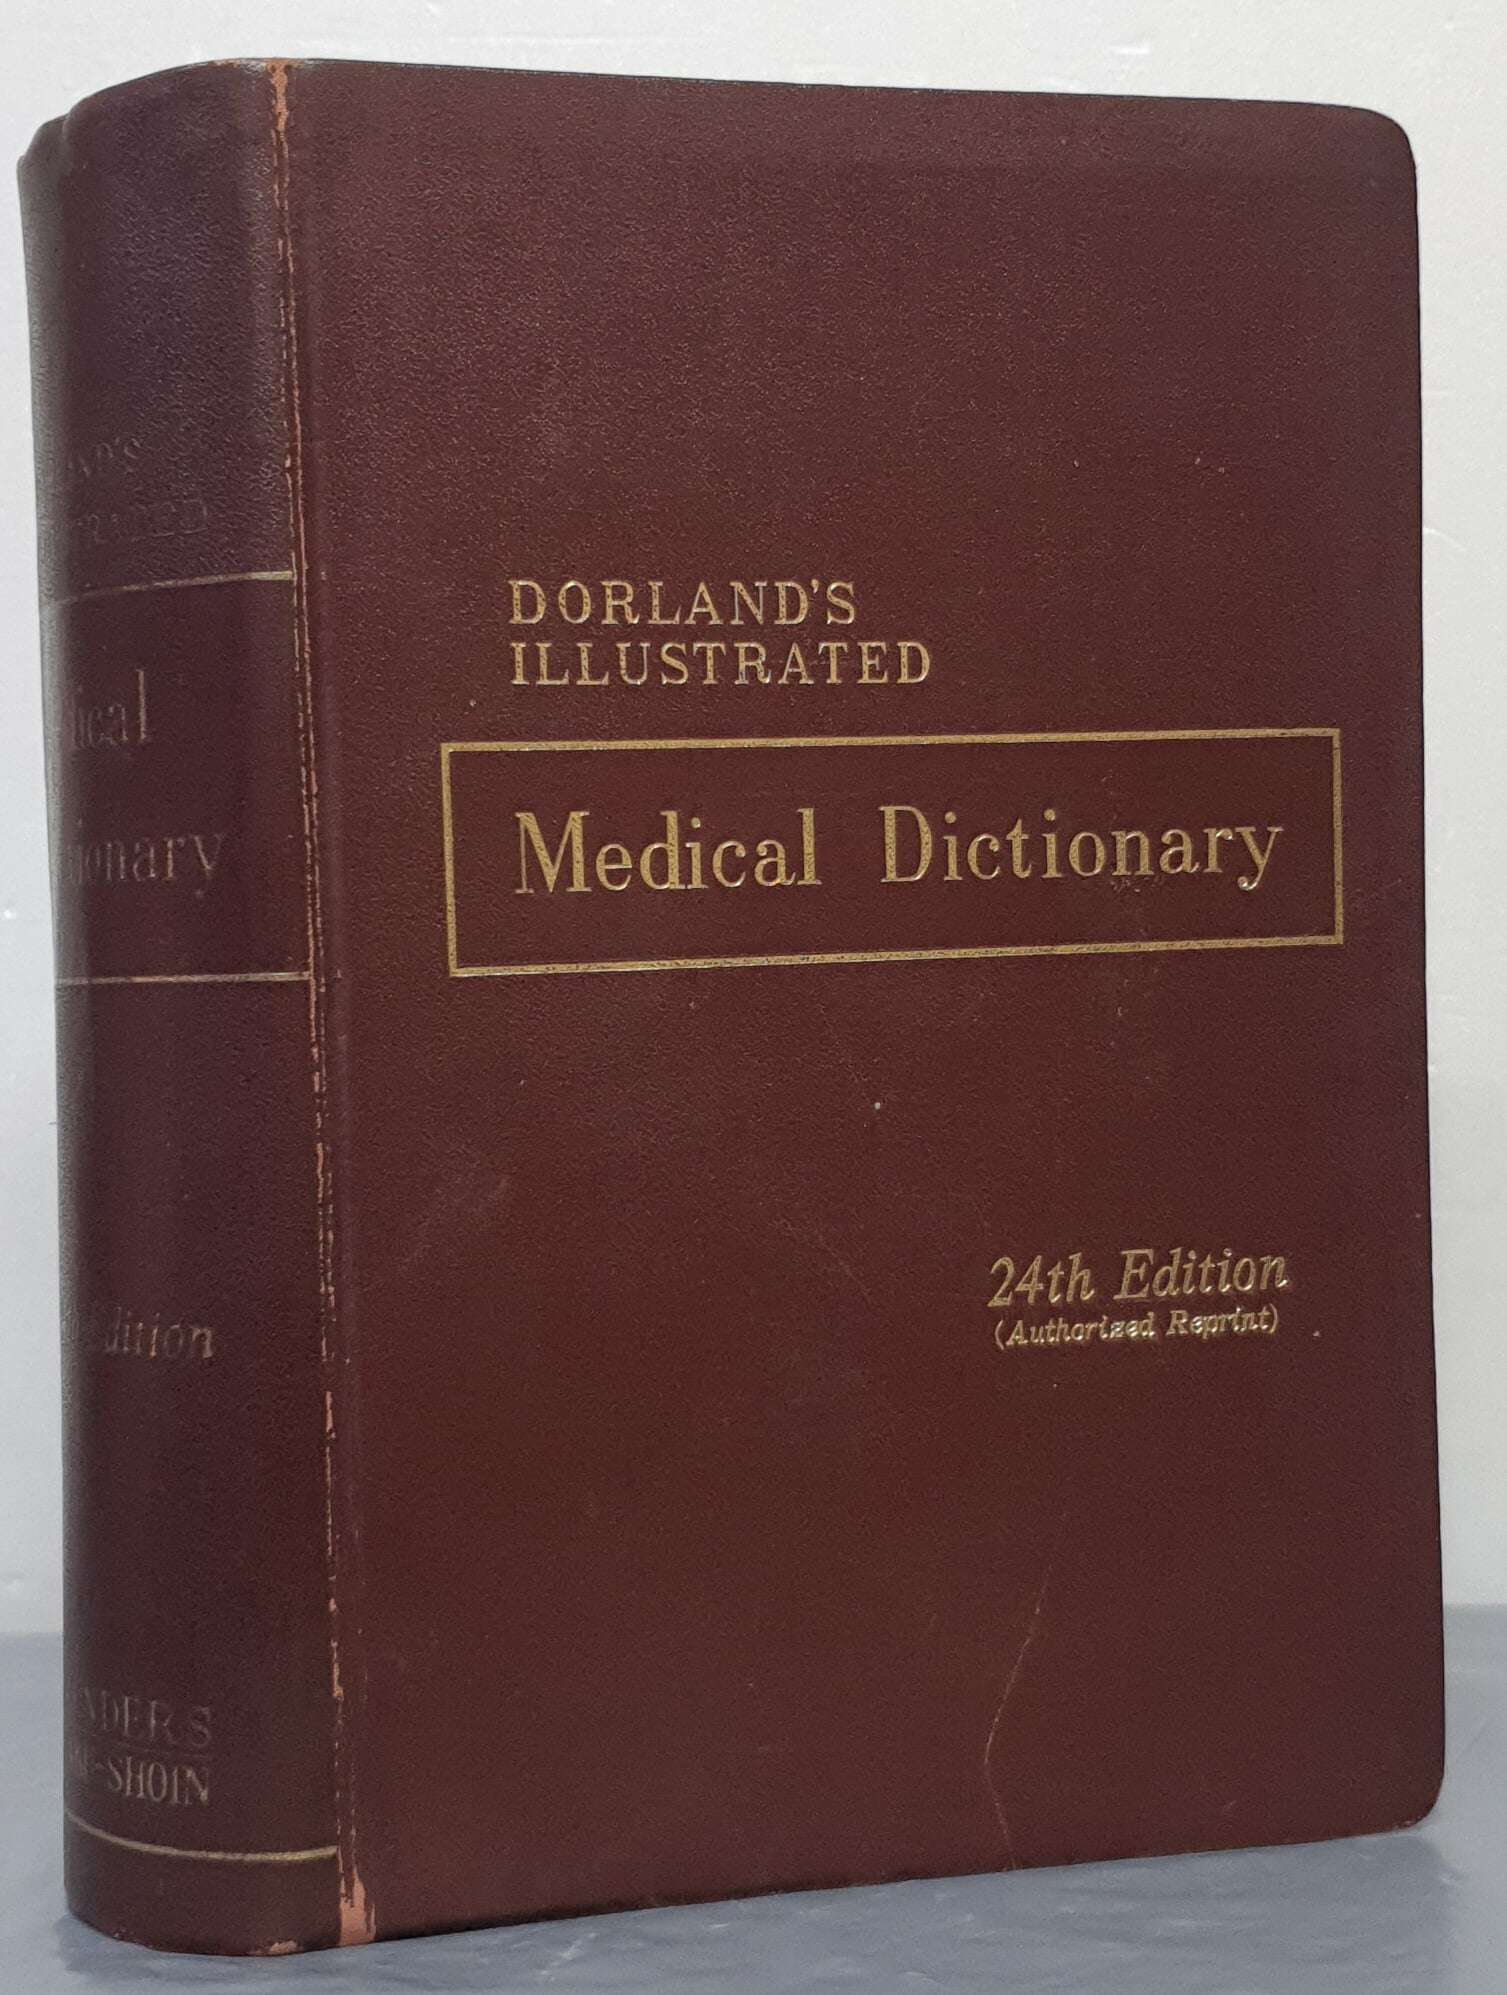 DORLAND‘S ILLUSTRATED Medical Dictionary 24th Editon(Asian Edition)